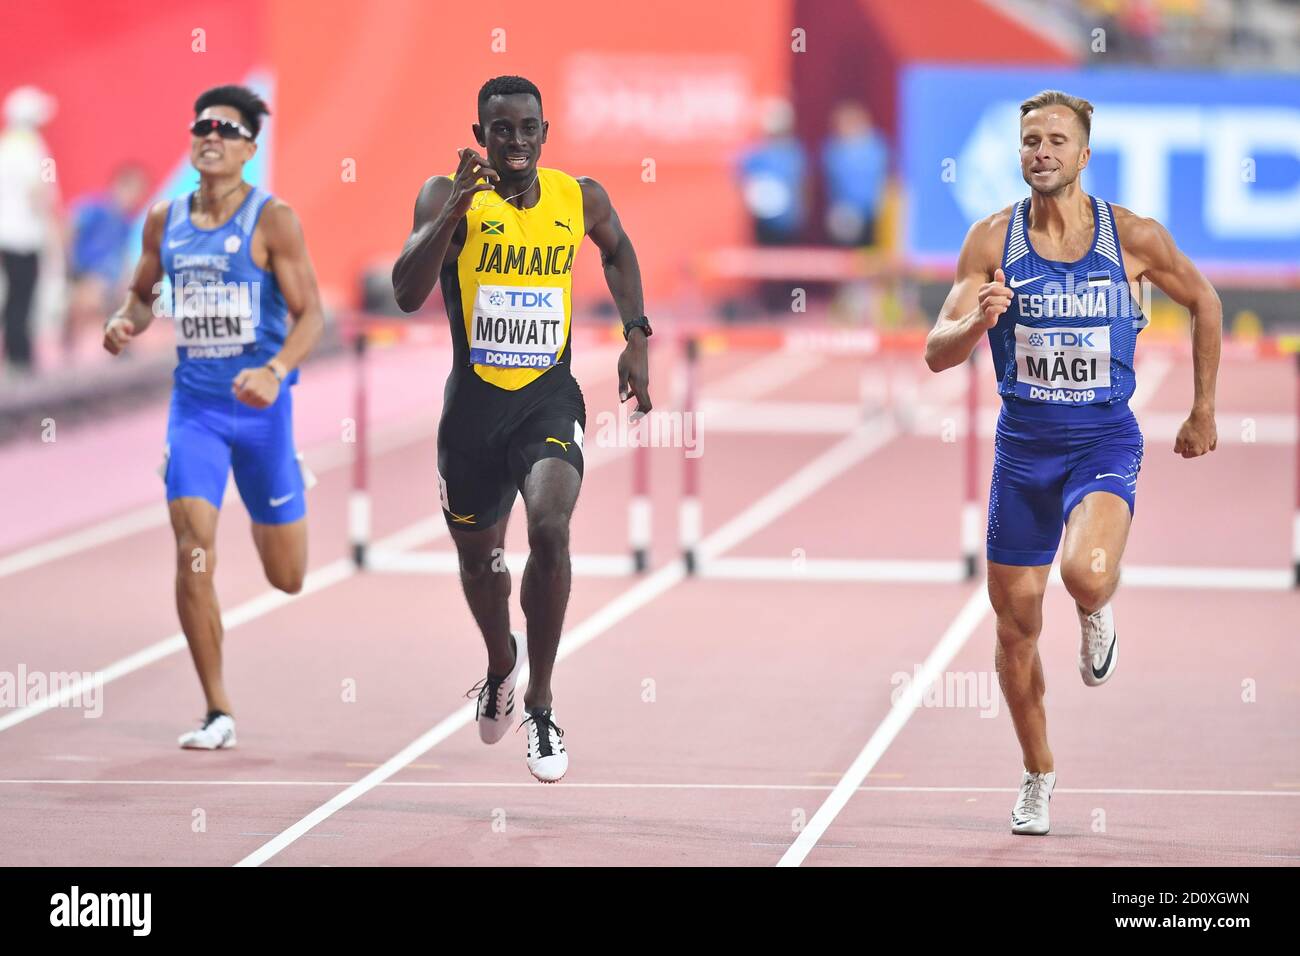 Rasmus Magi (Estonia), Kemar Mowatt (Jamaica), Chieh Chen (Taipei). 400 metres hurdles, Semi final. IAAF World Athletics Championships, Doha 2019 Stock Photo